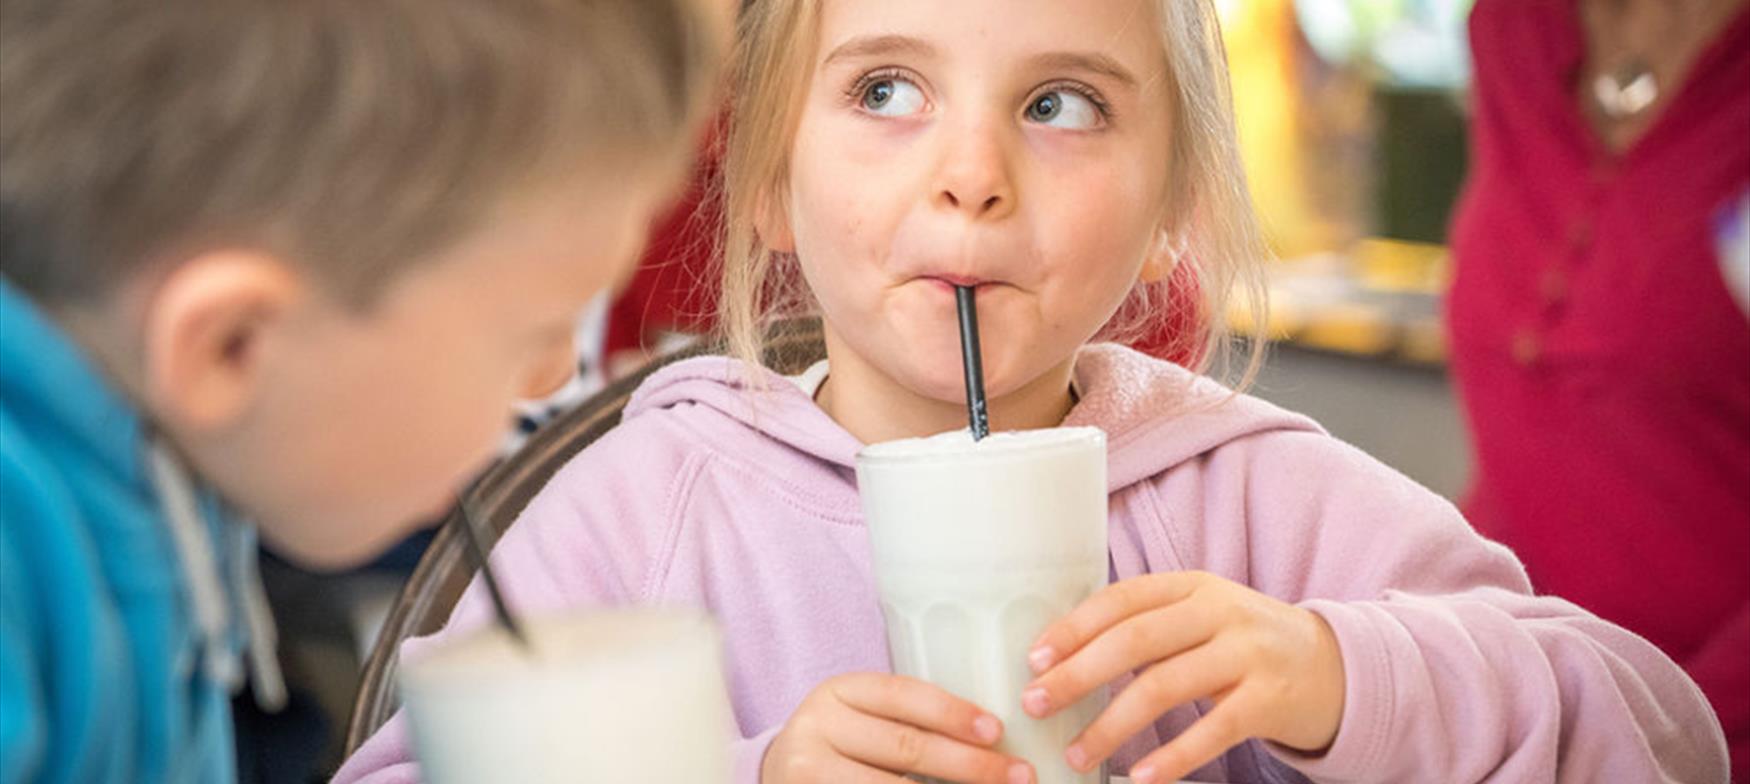 Young girl drinking milkshake